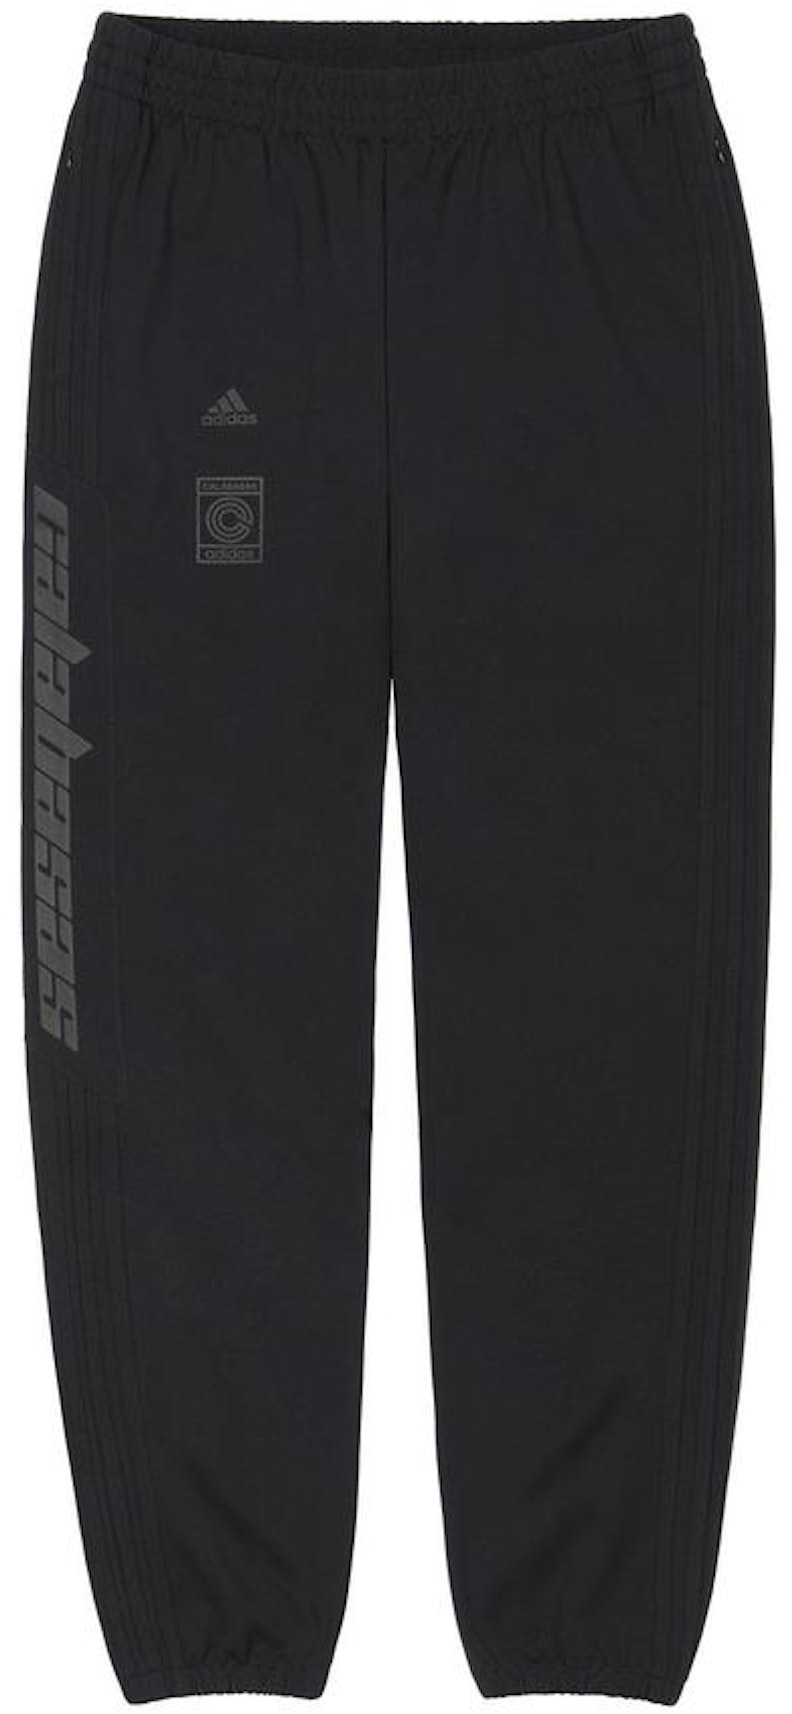 Yeezy Calabasas Track Pants Black/Black - FW17 - US